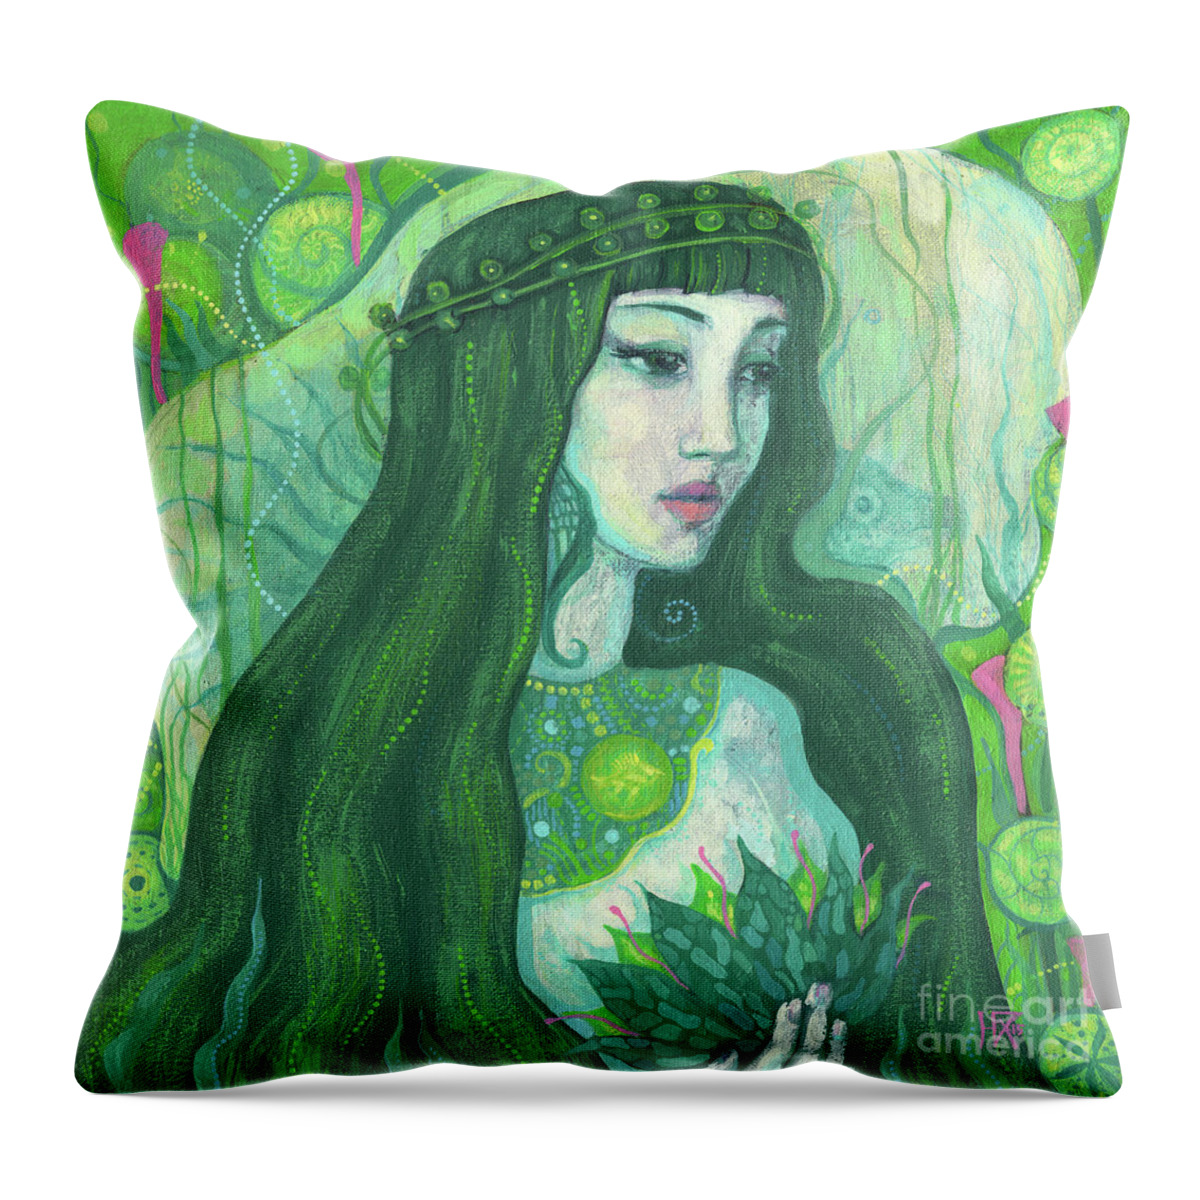 Undine Throw Pillow featuring the painting Green Mermaid, Imaginary Portrait, Fantasy Art by Julia Khoroshikh